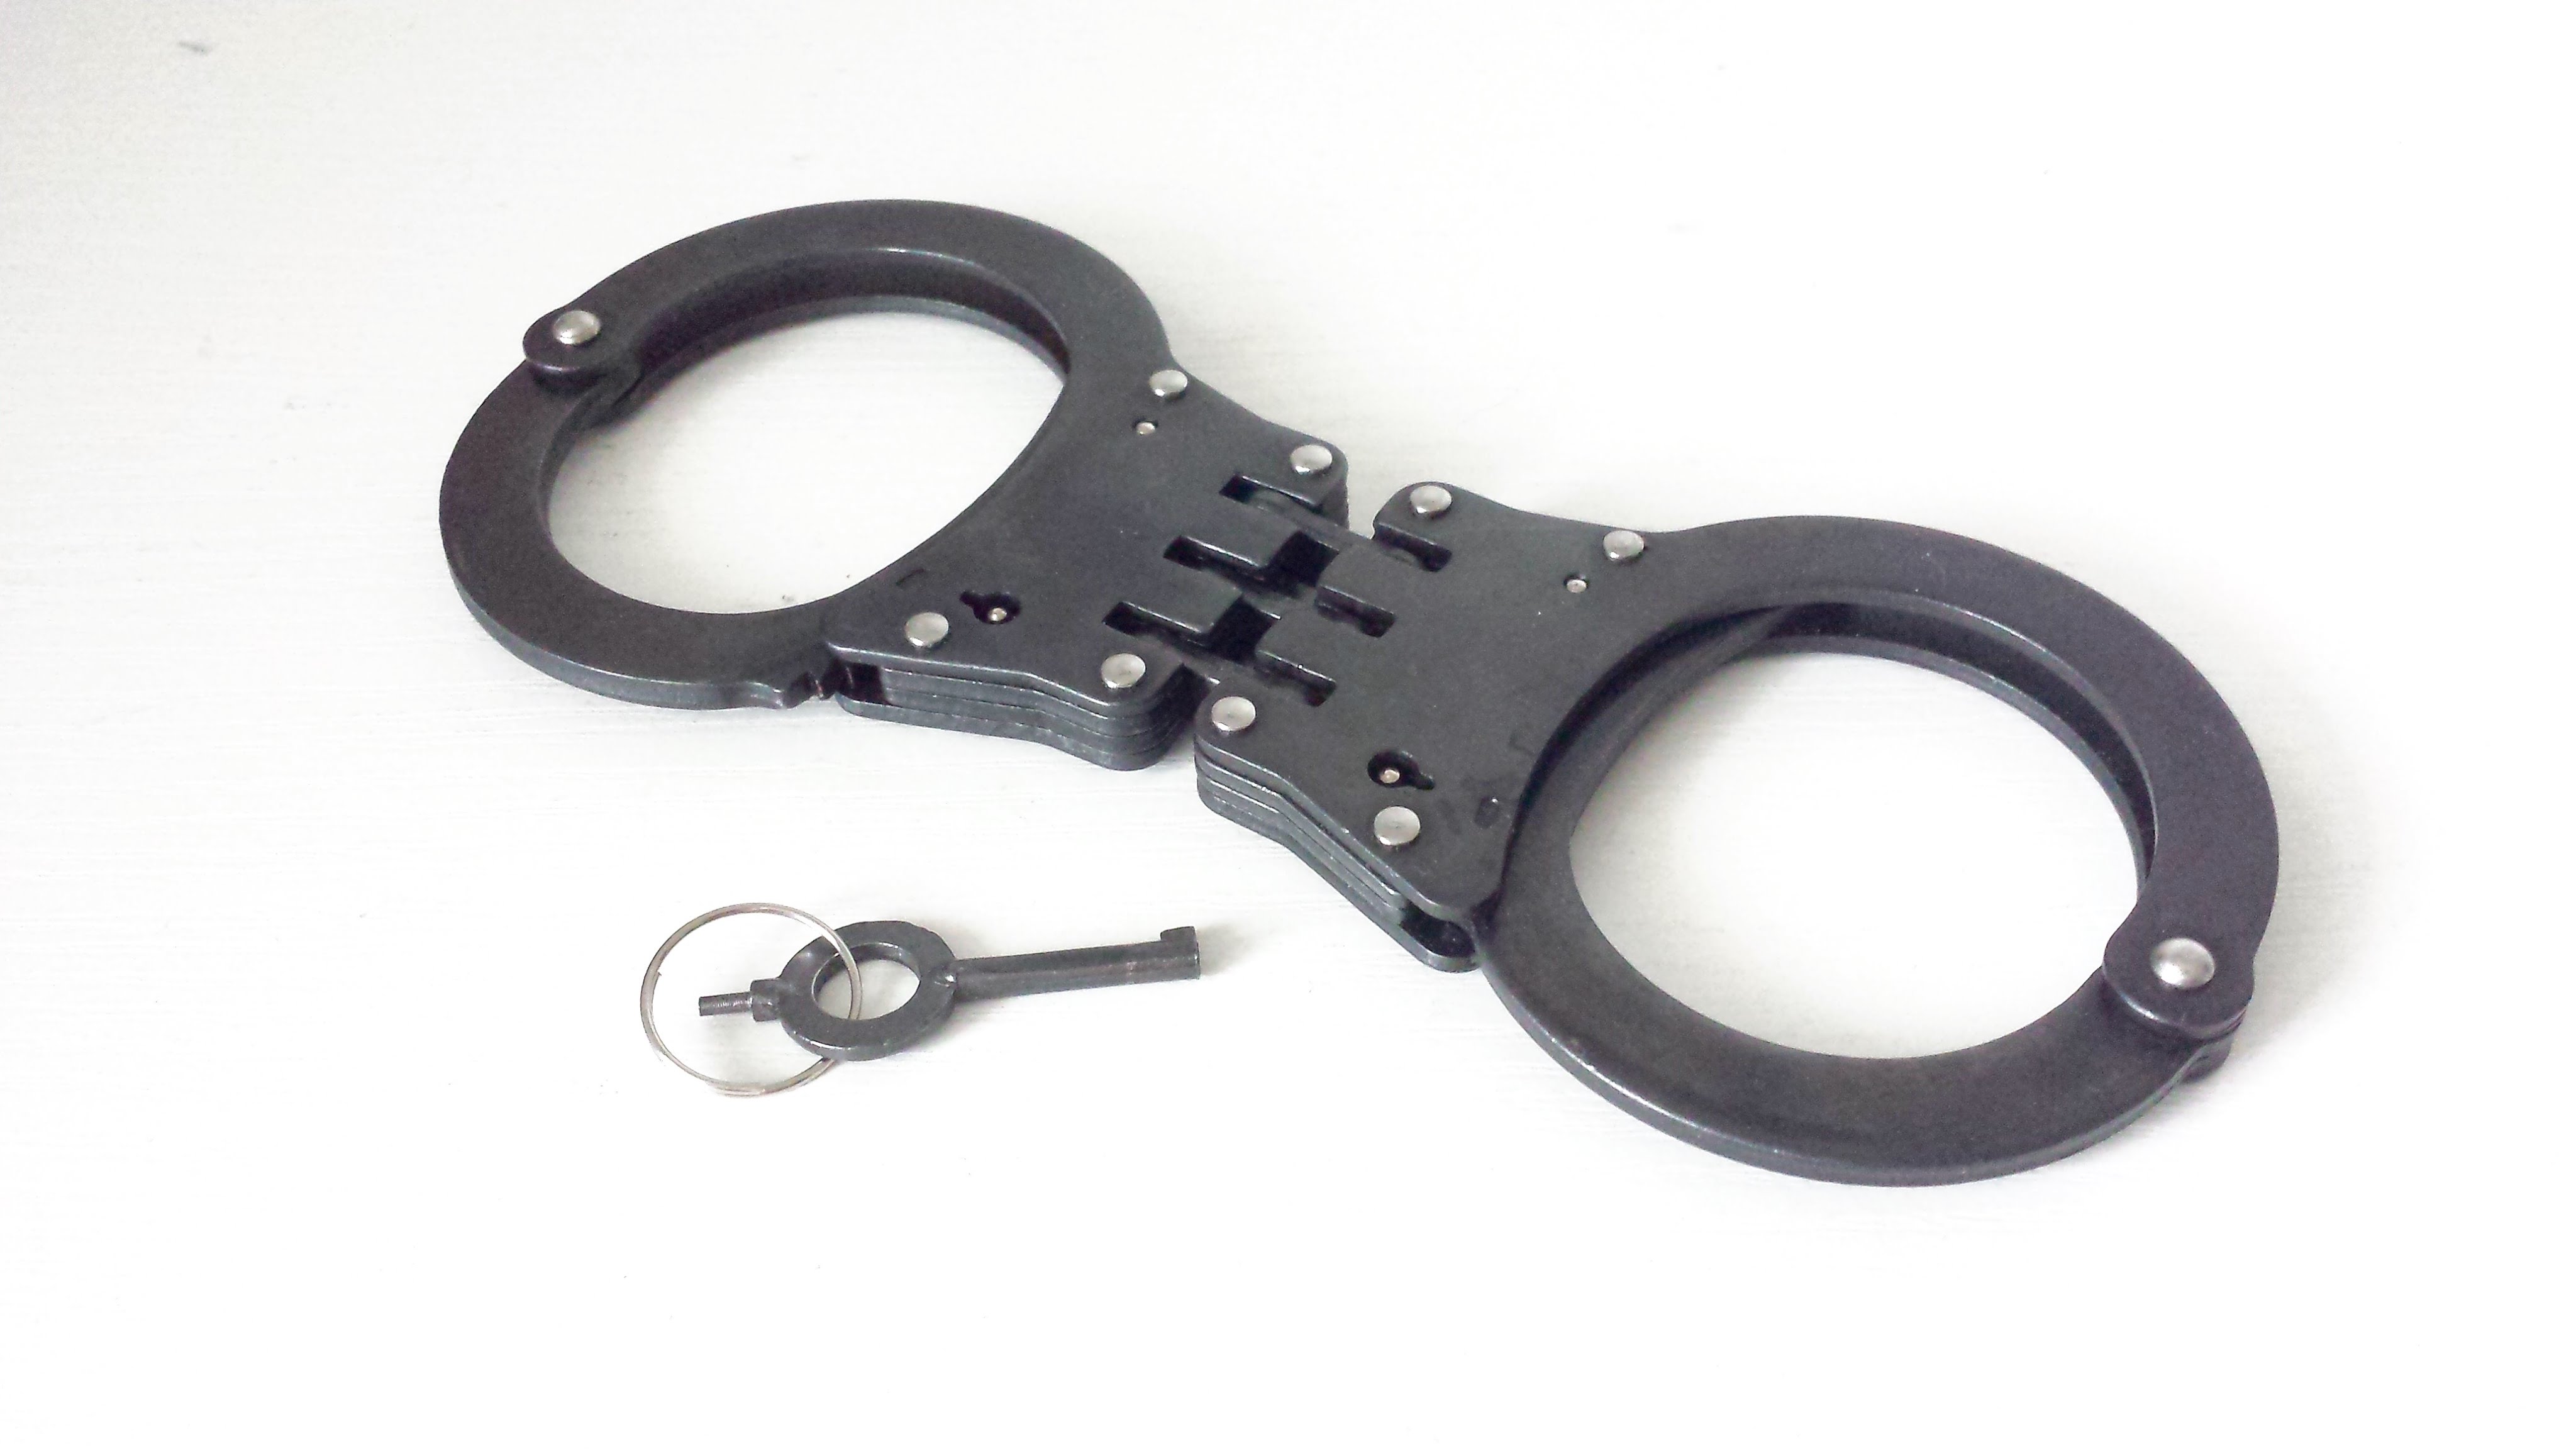 Handcuffs photo